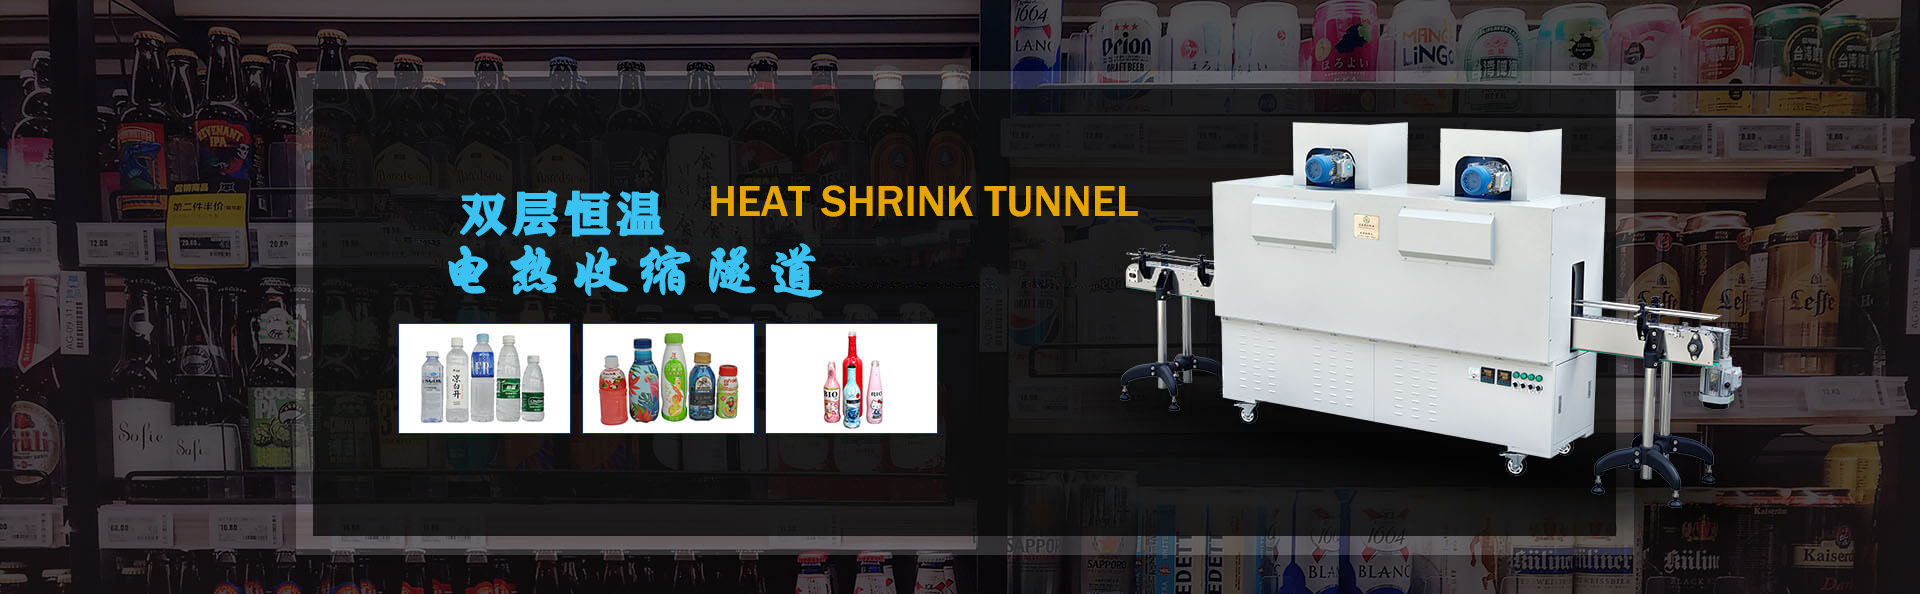 heat shrink tunnel